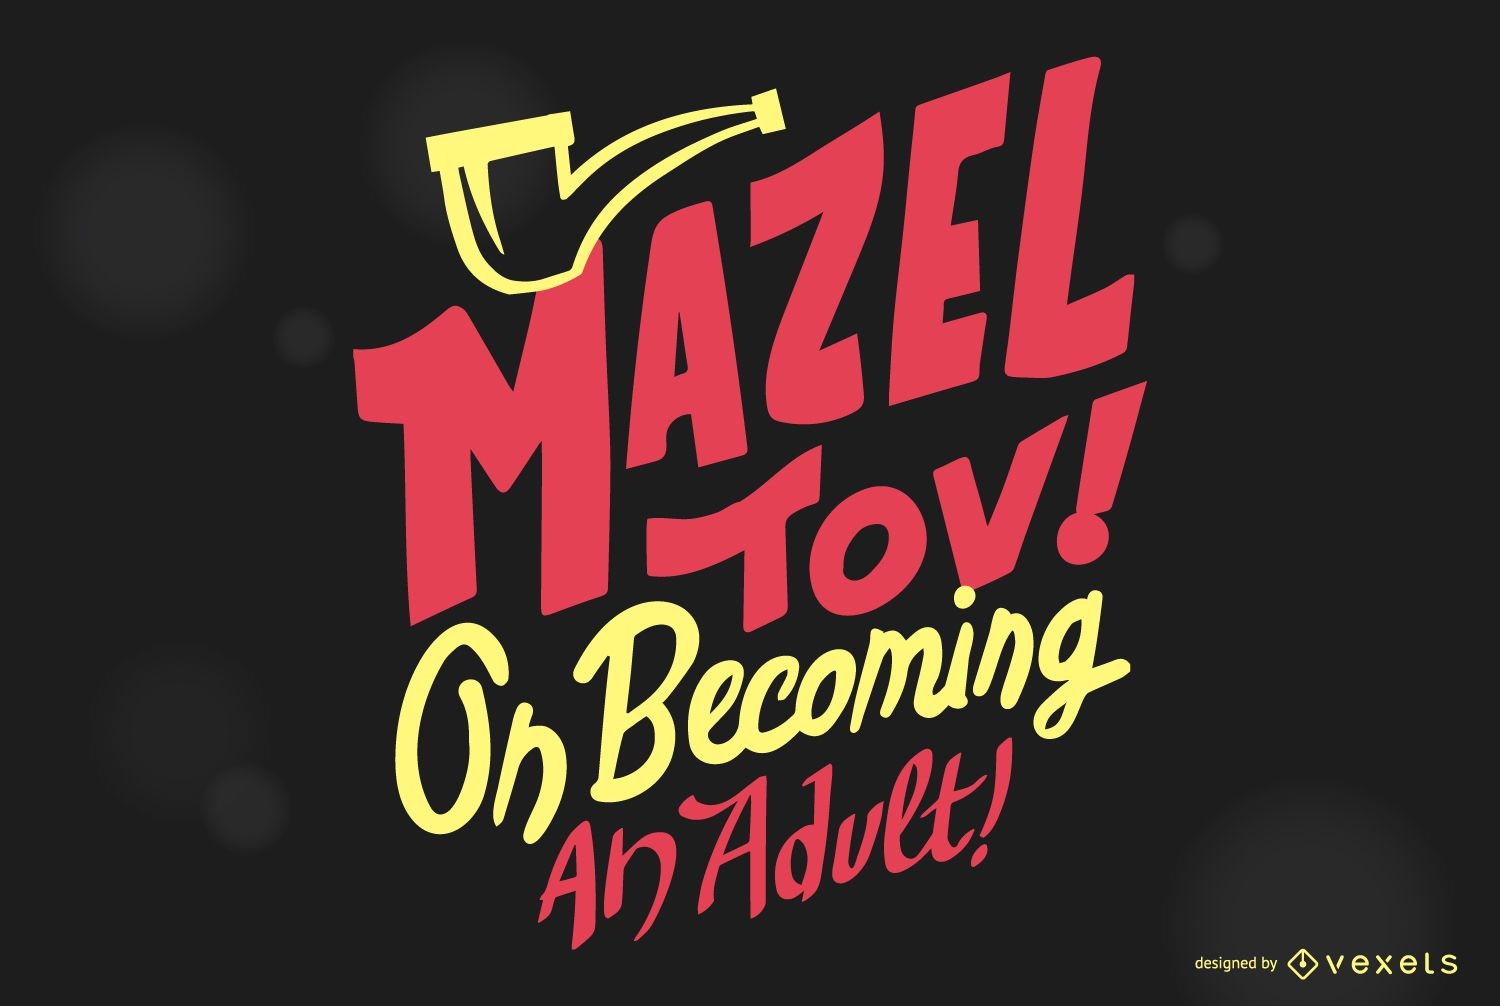 Dise?o de letras mazel tov bar mitzvah